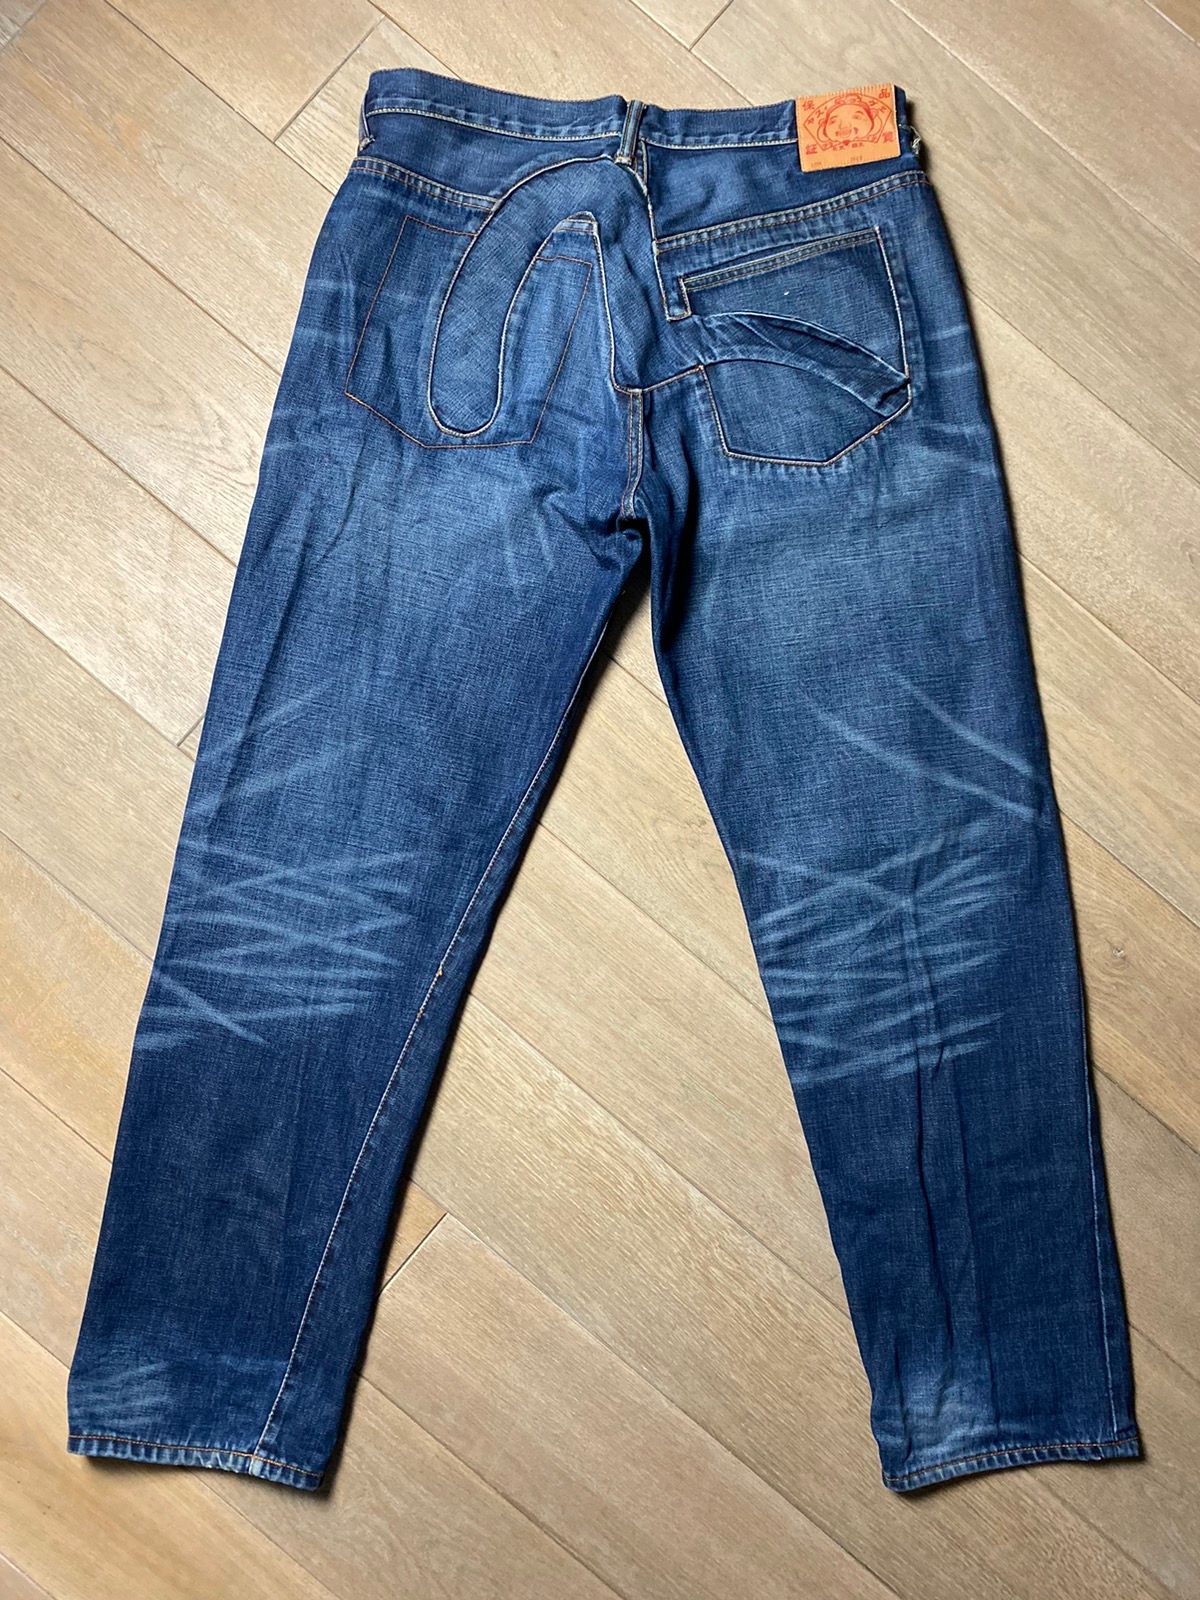 Vintage Evisu Japan vintage blue jeans denim pants big seagull logo Size US 38 / EU 54 - 1 Preview